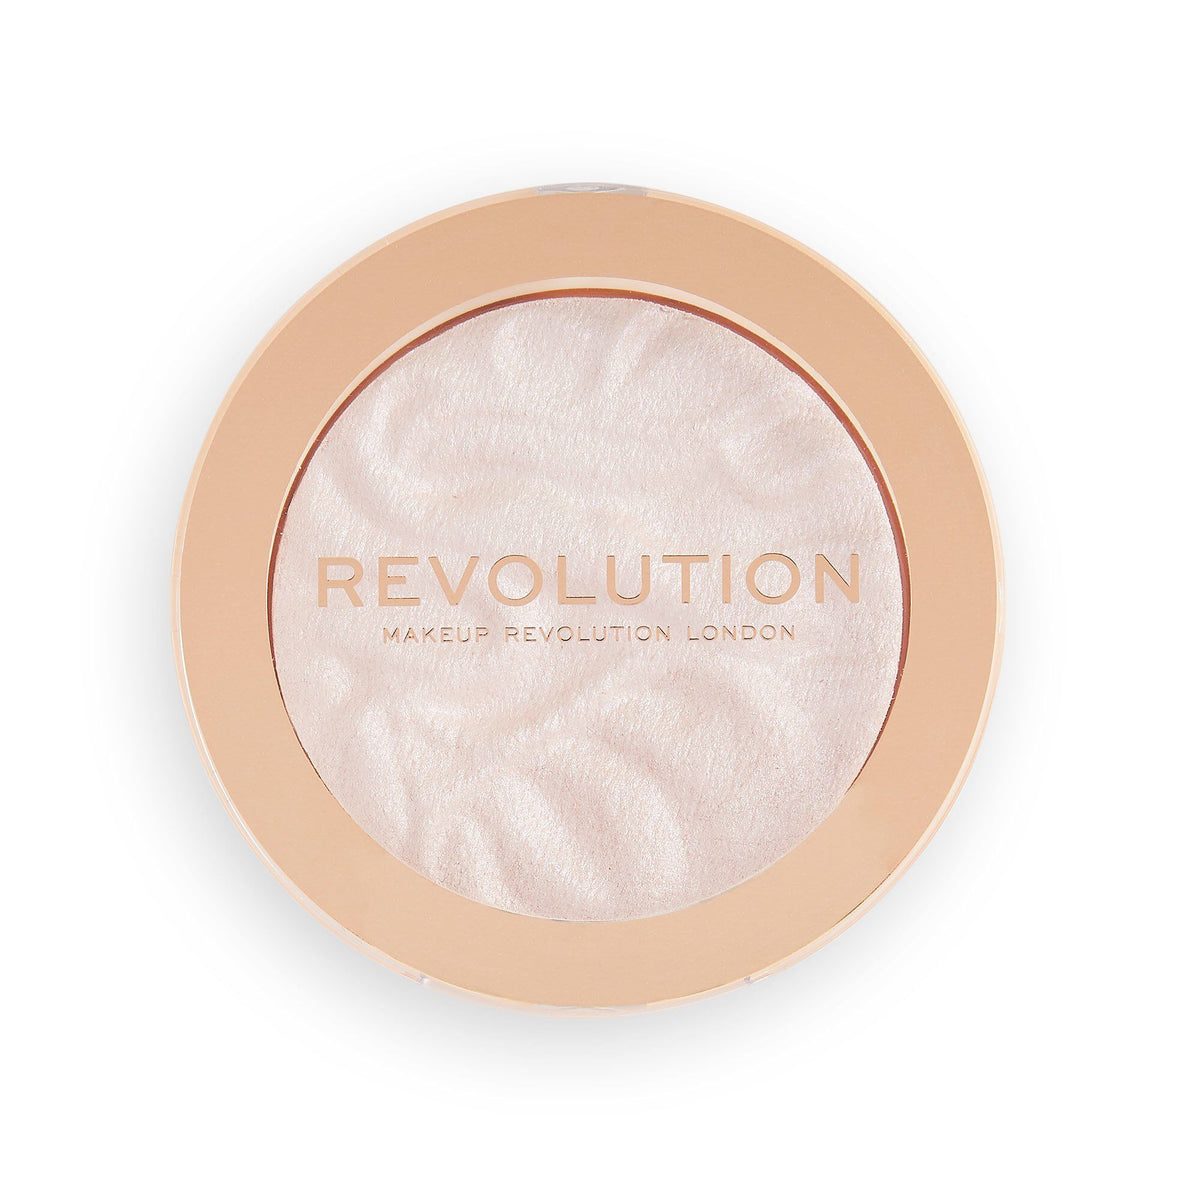 Makeup Revolution Reloaded Highlighter Peach Lights